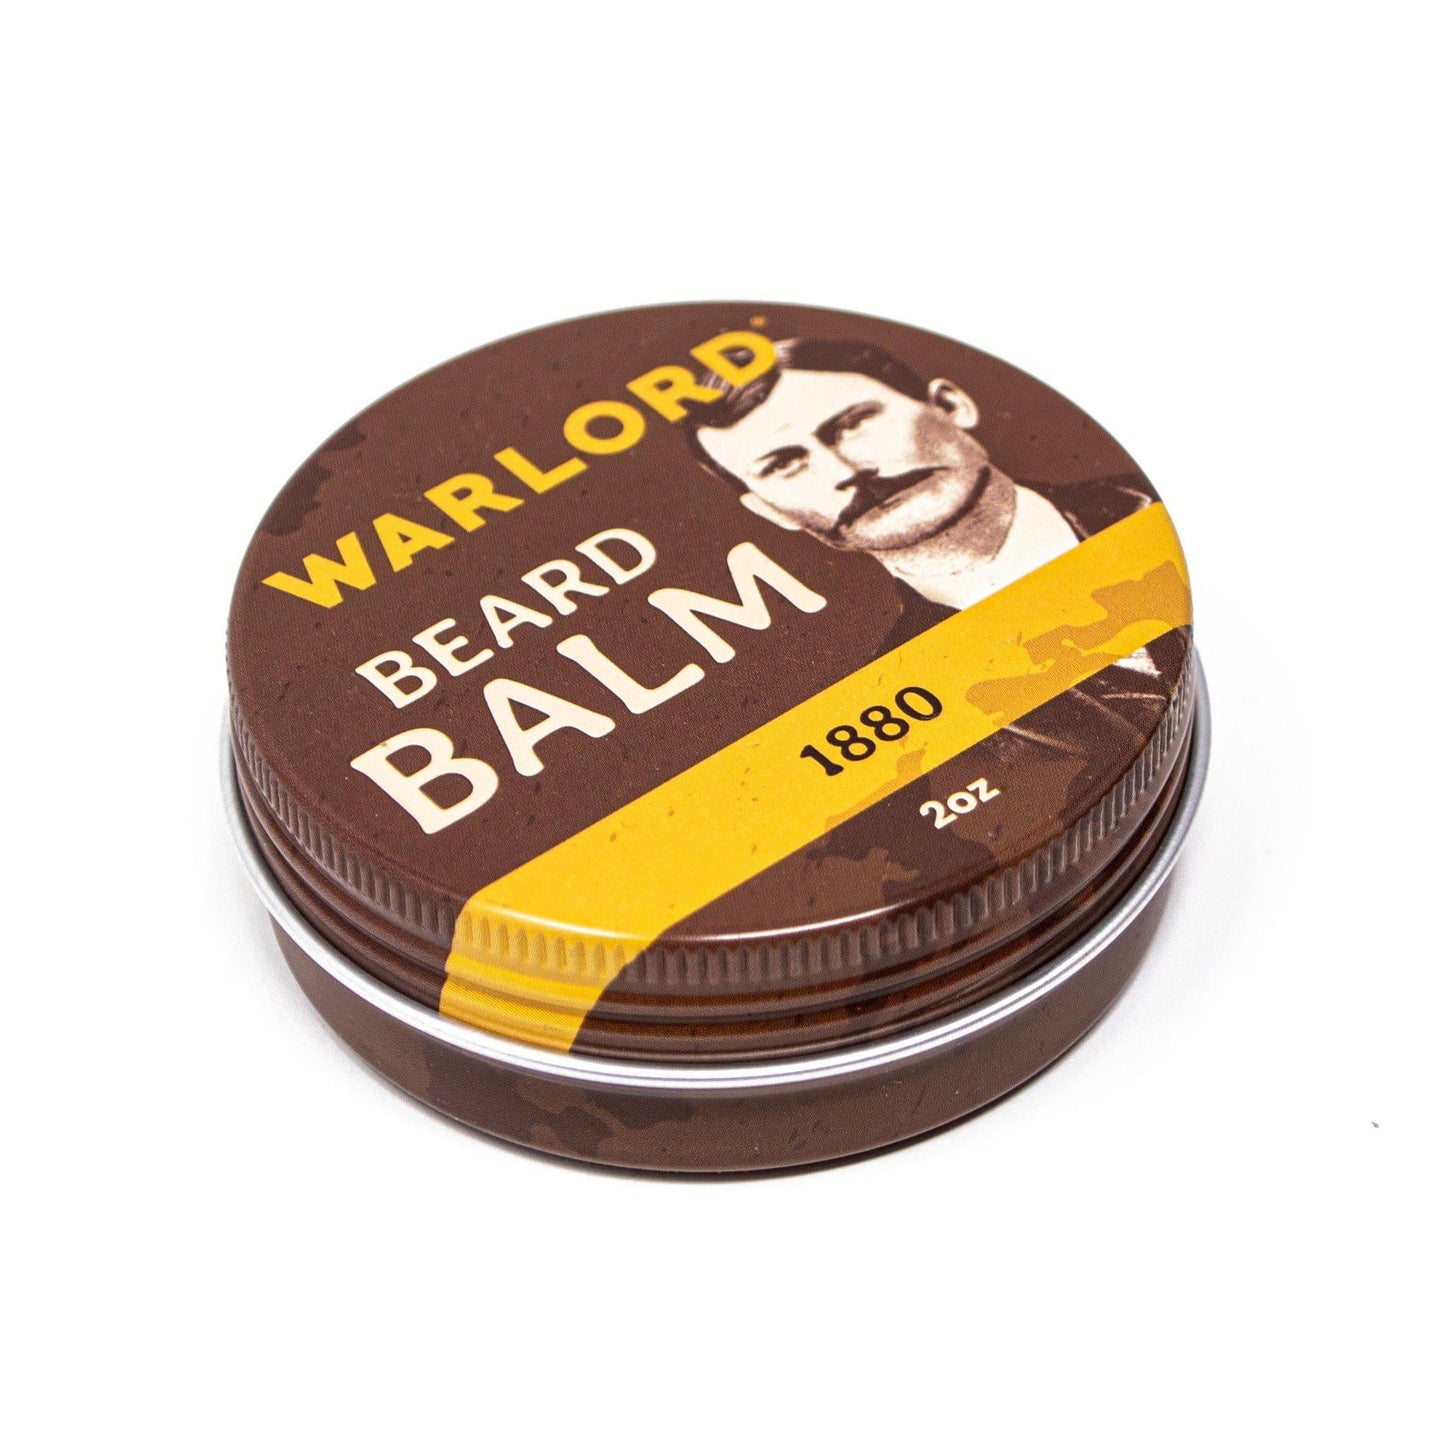 1880 Beard Balm - Warlord - Men's Grooming Essentials